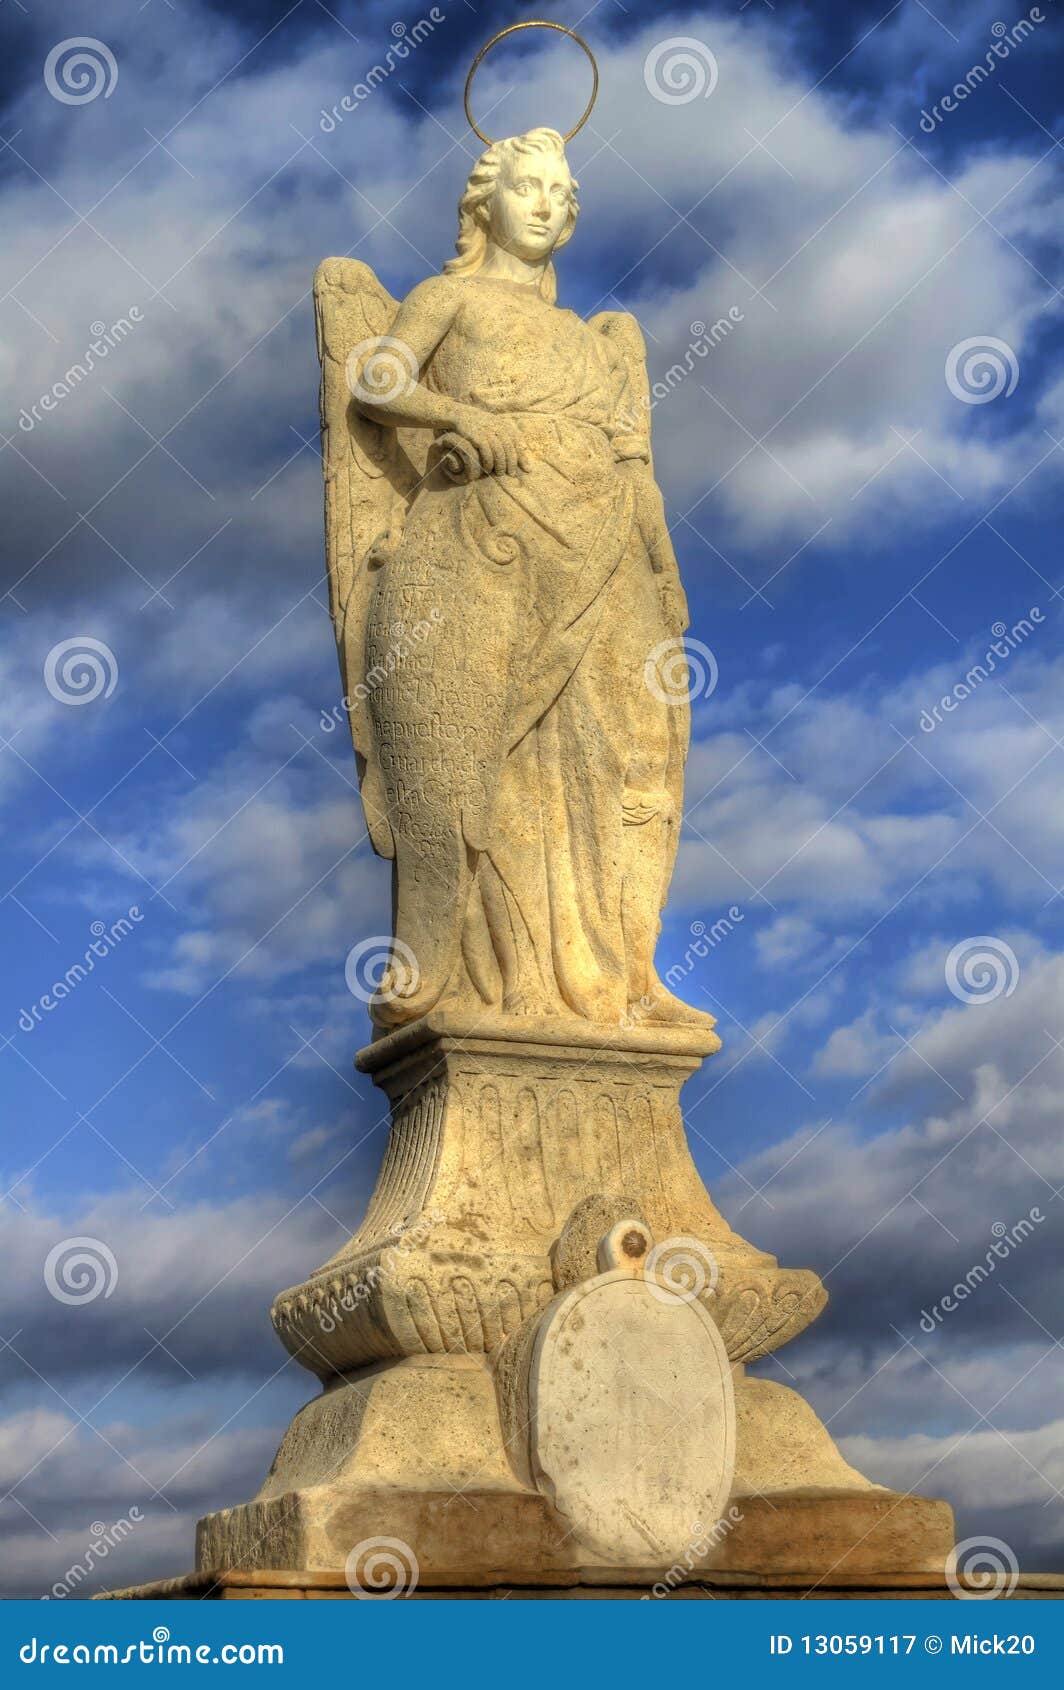 statue of cordoba patron san rafael